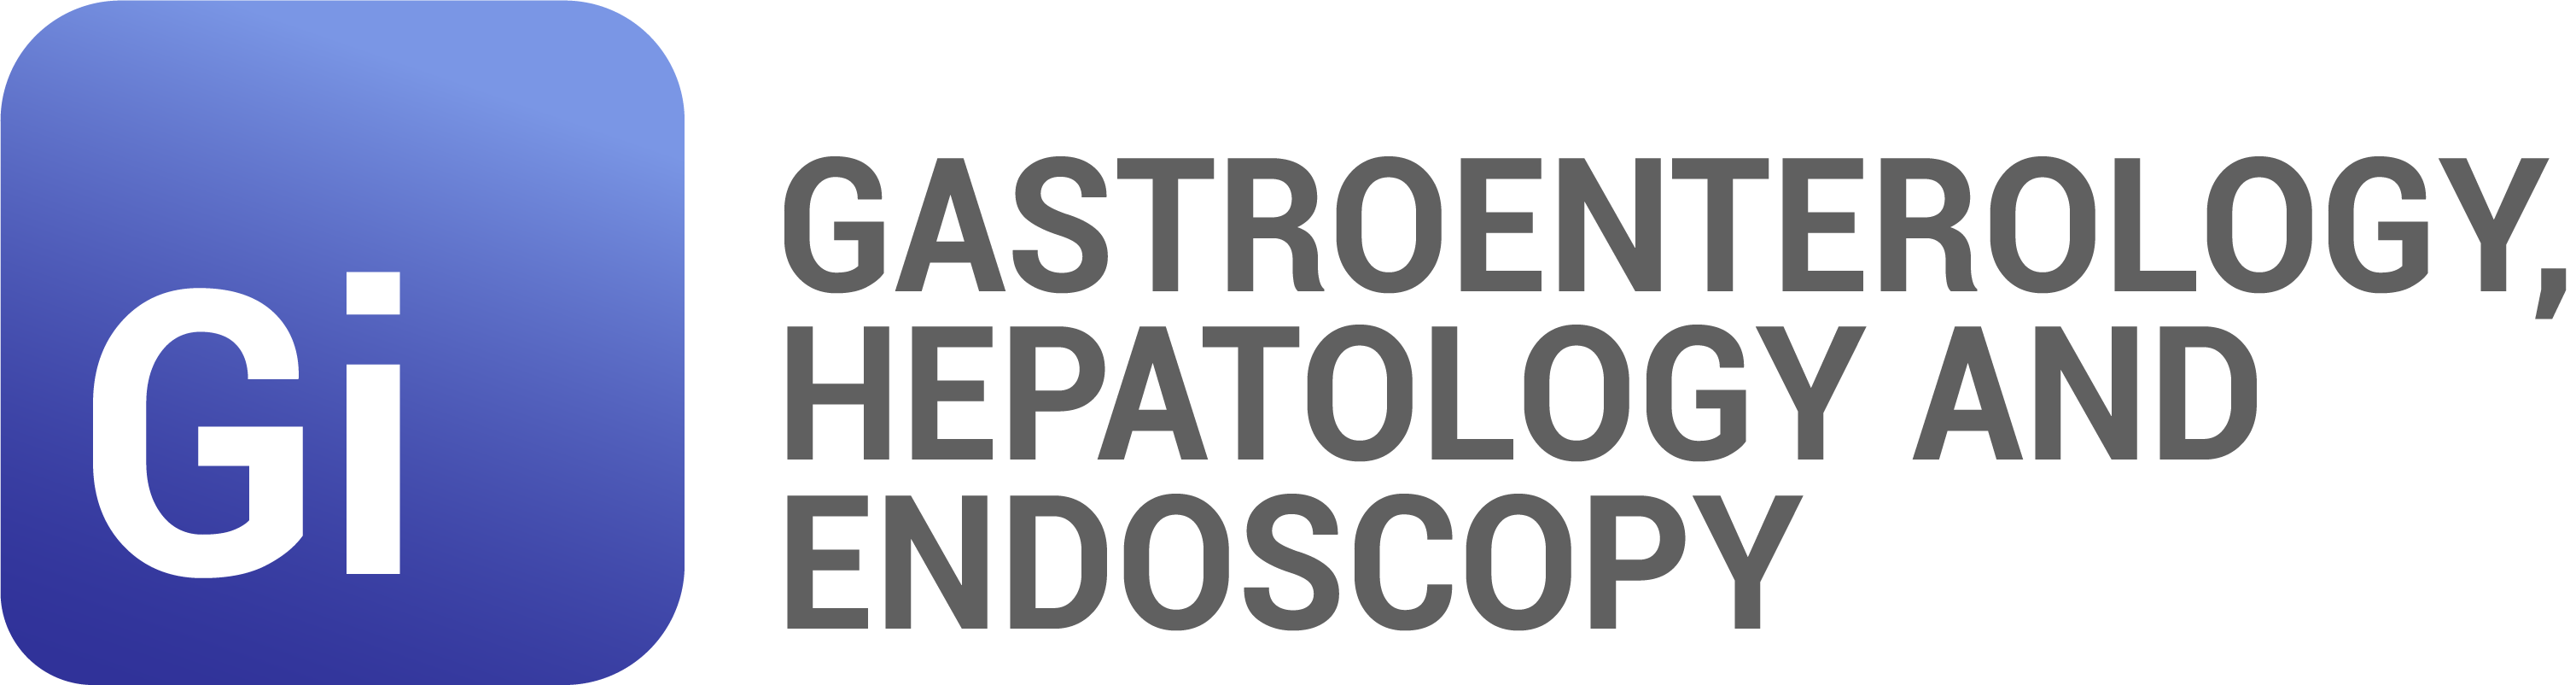 Gastroenterology, Hepatology and Endoscopy Image